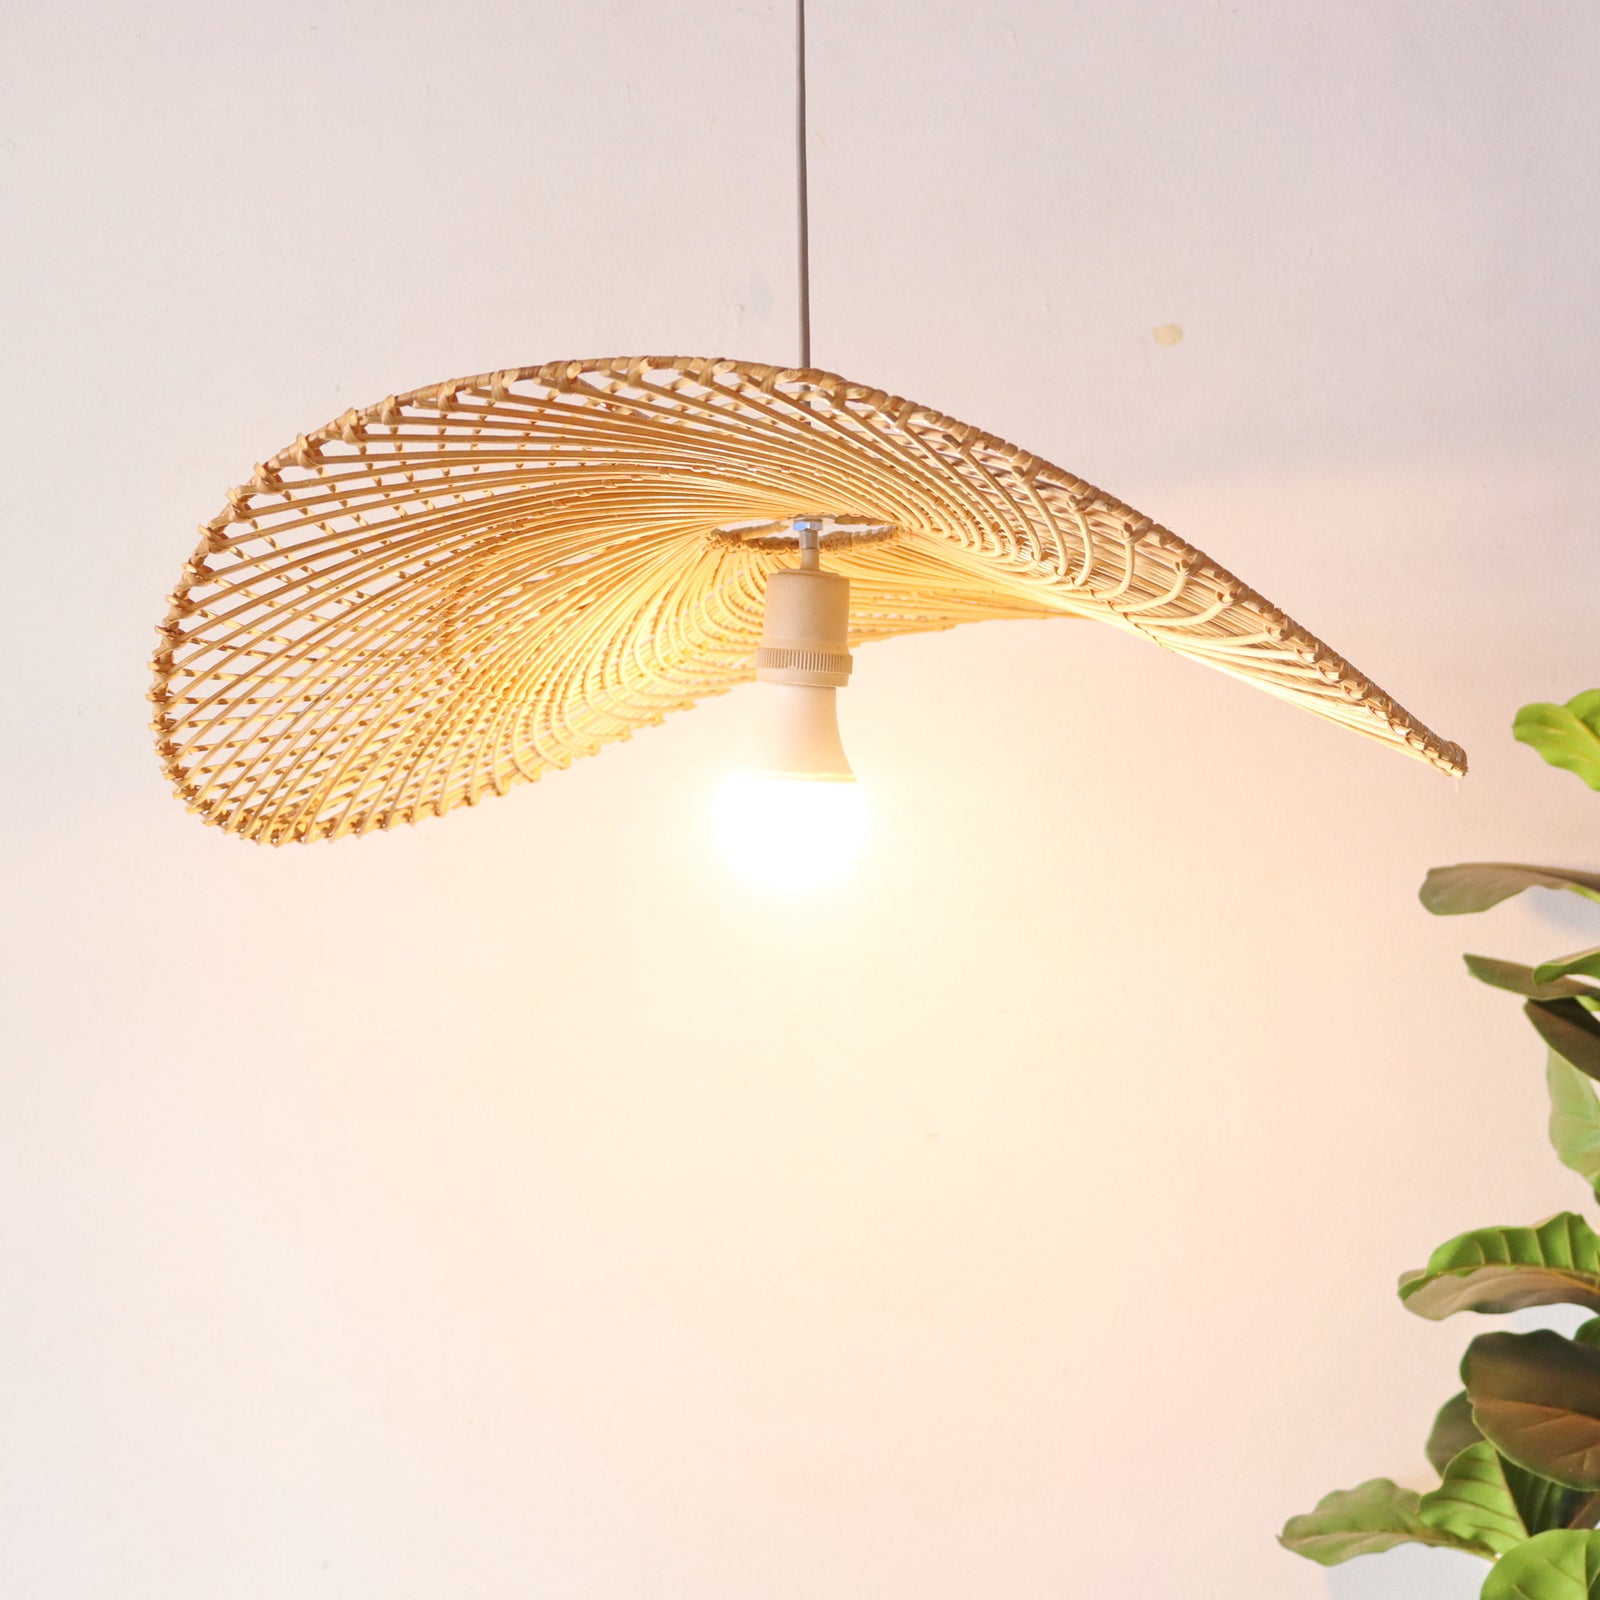 Rattan Pendant Lights | Natural Wicker Weave Lighting